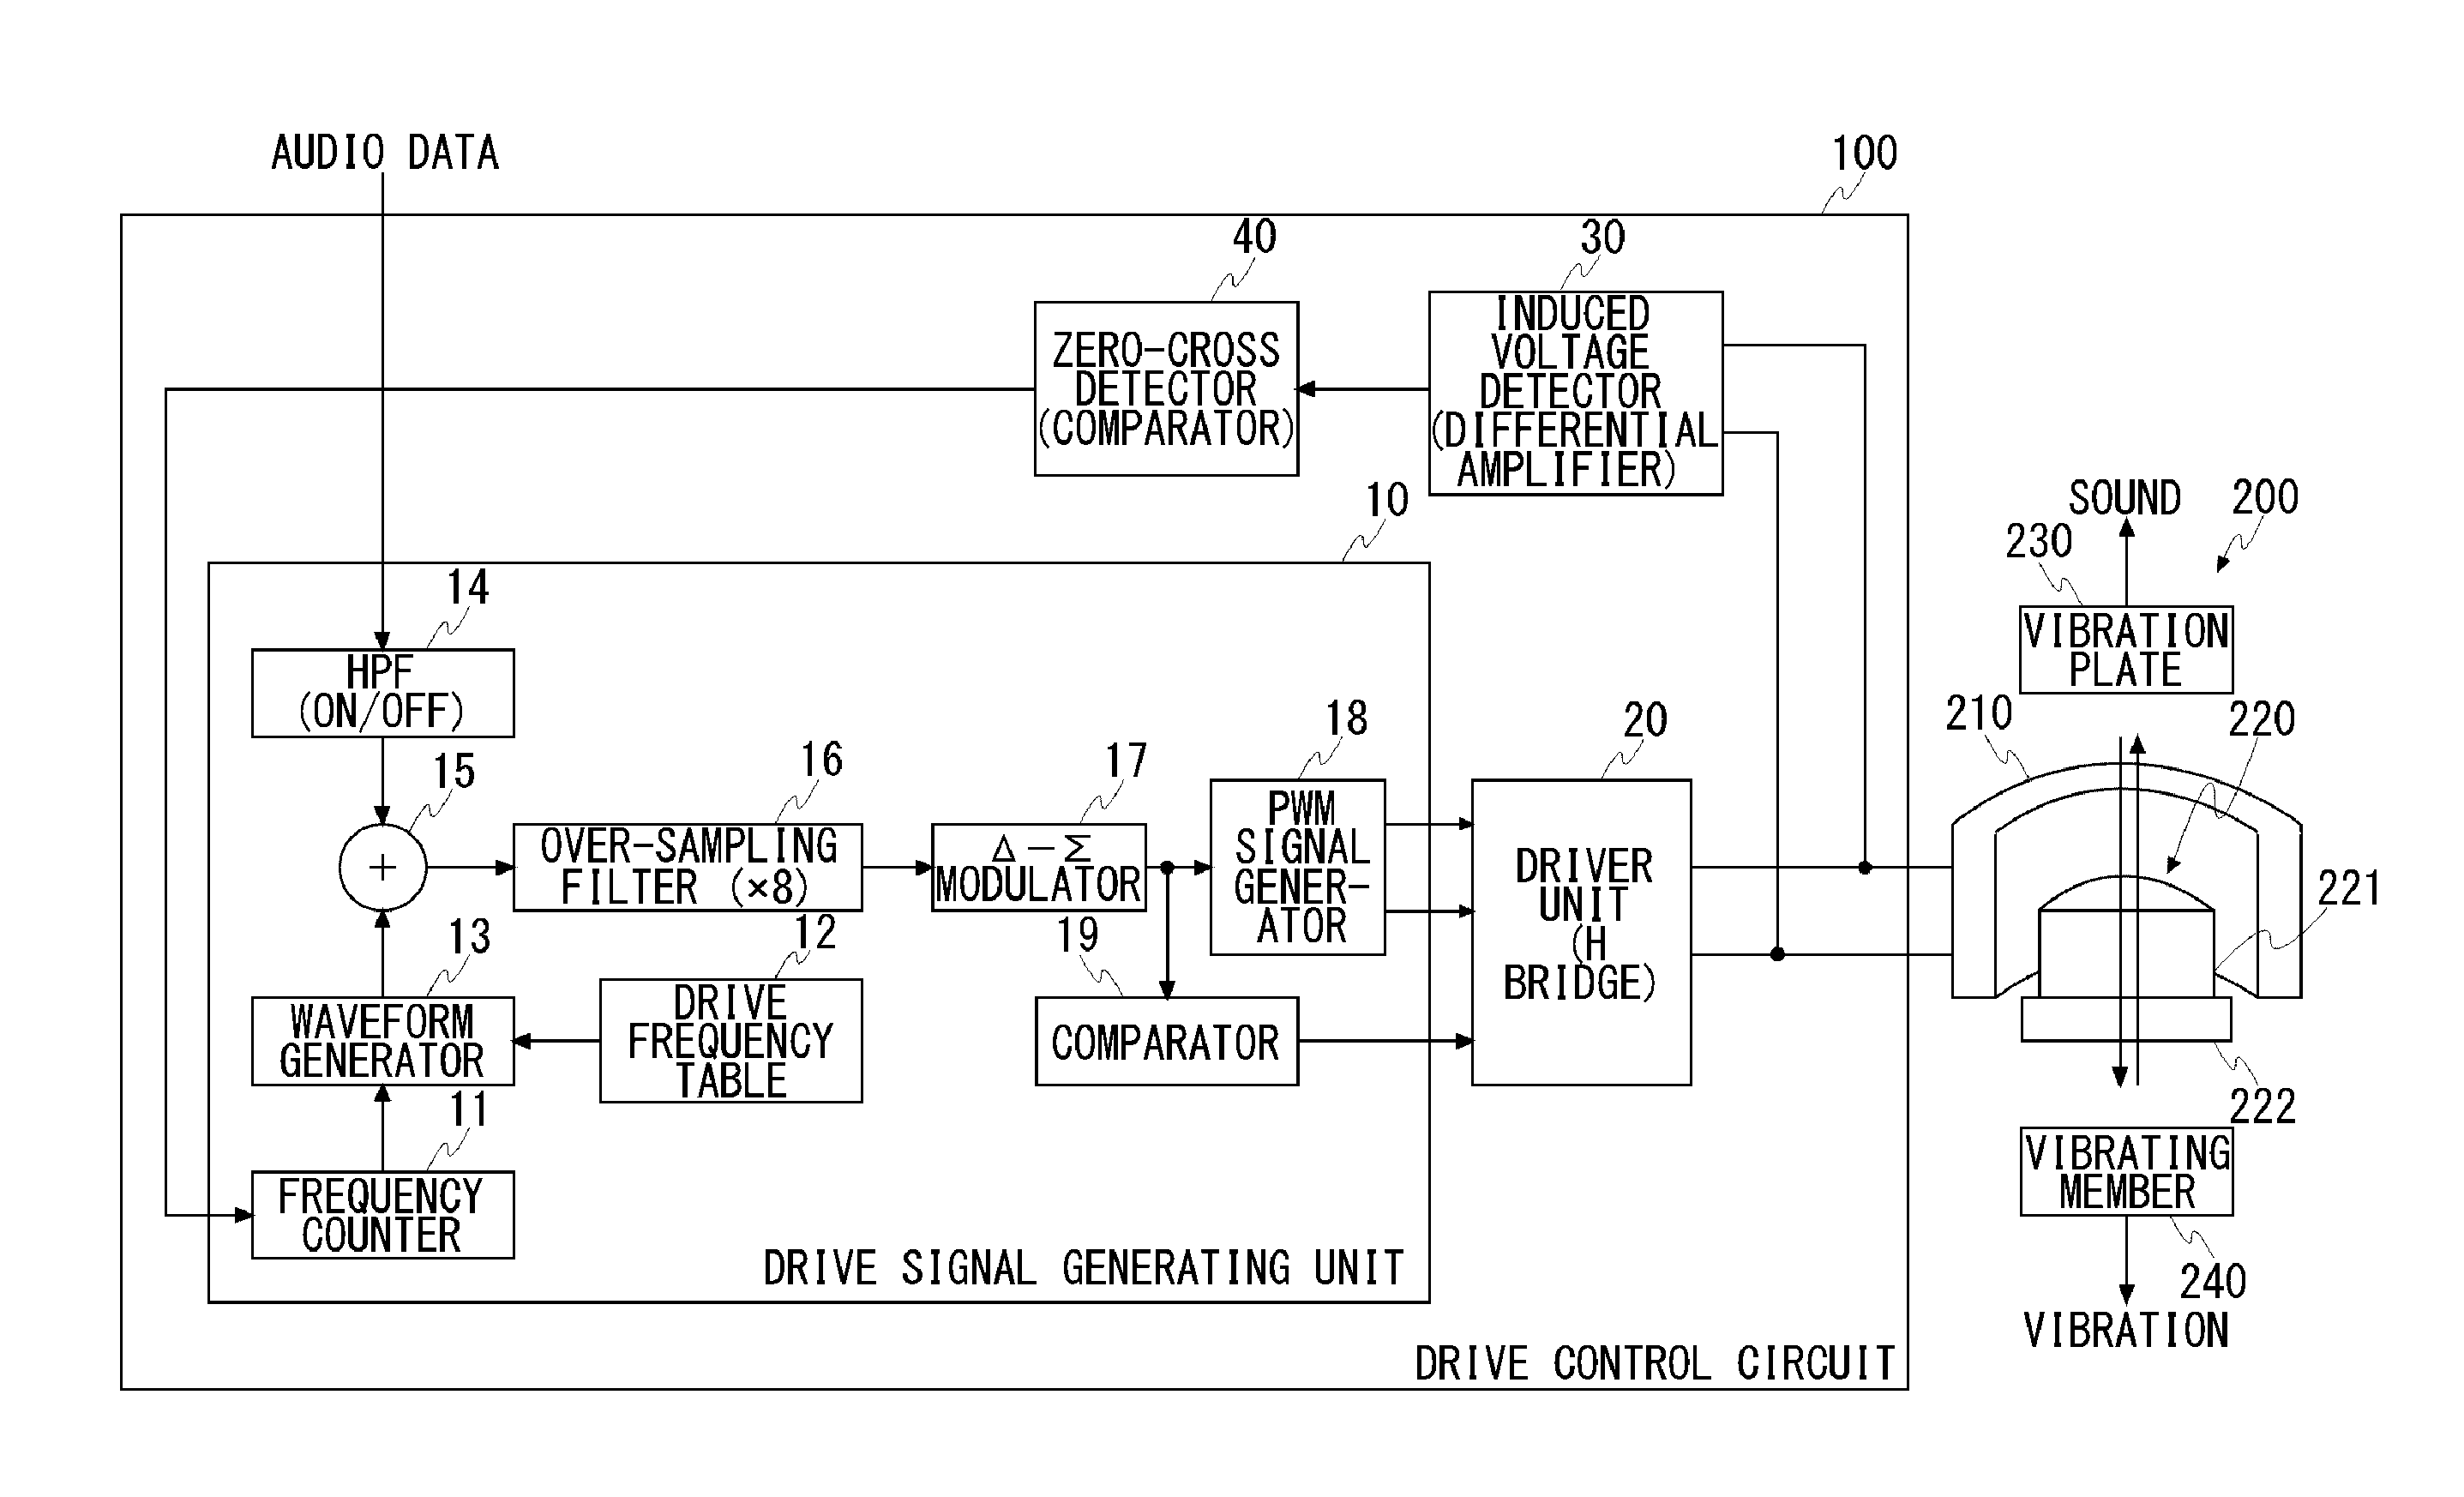 Drive control circuit for vibration speaker